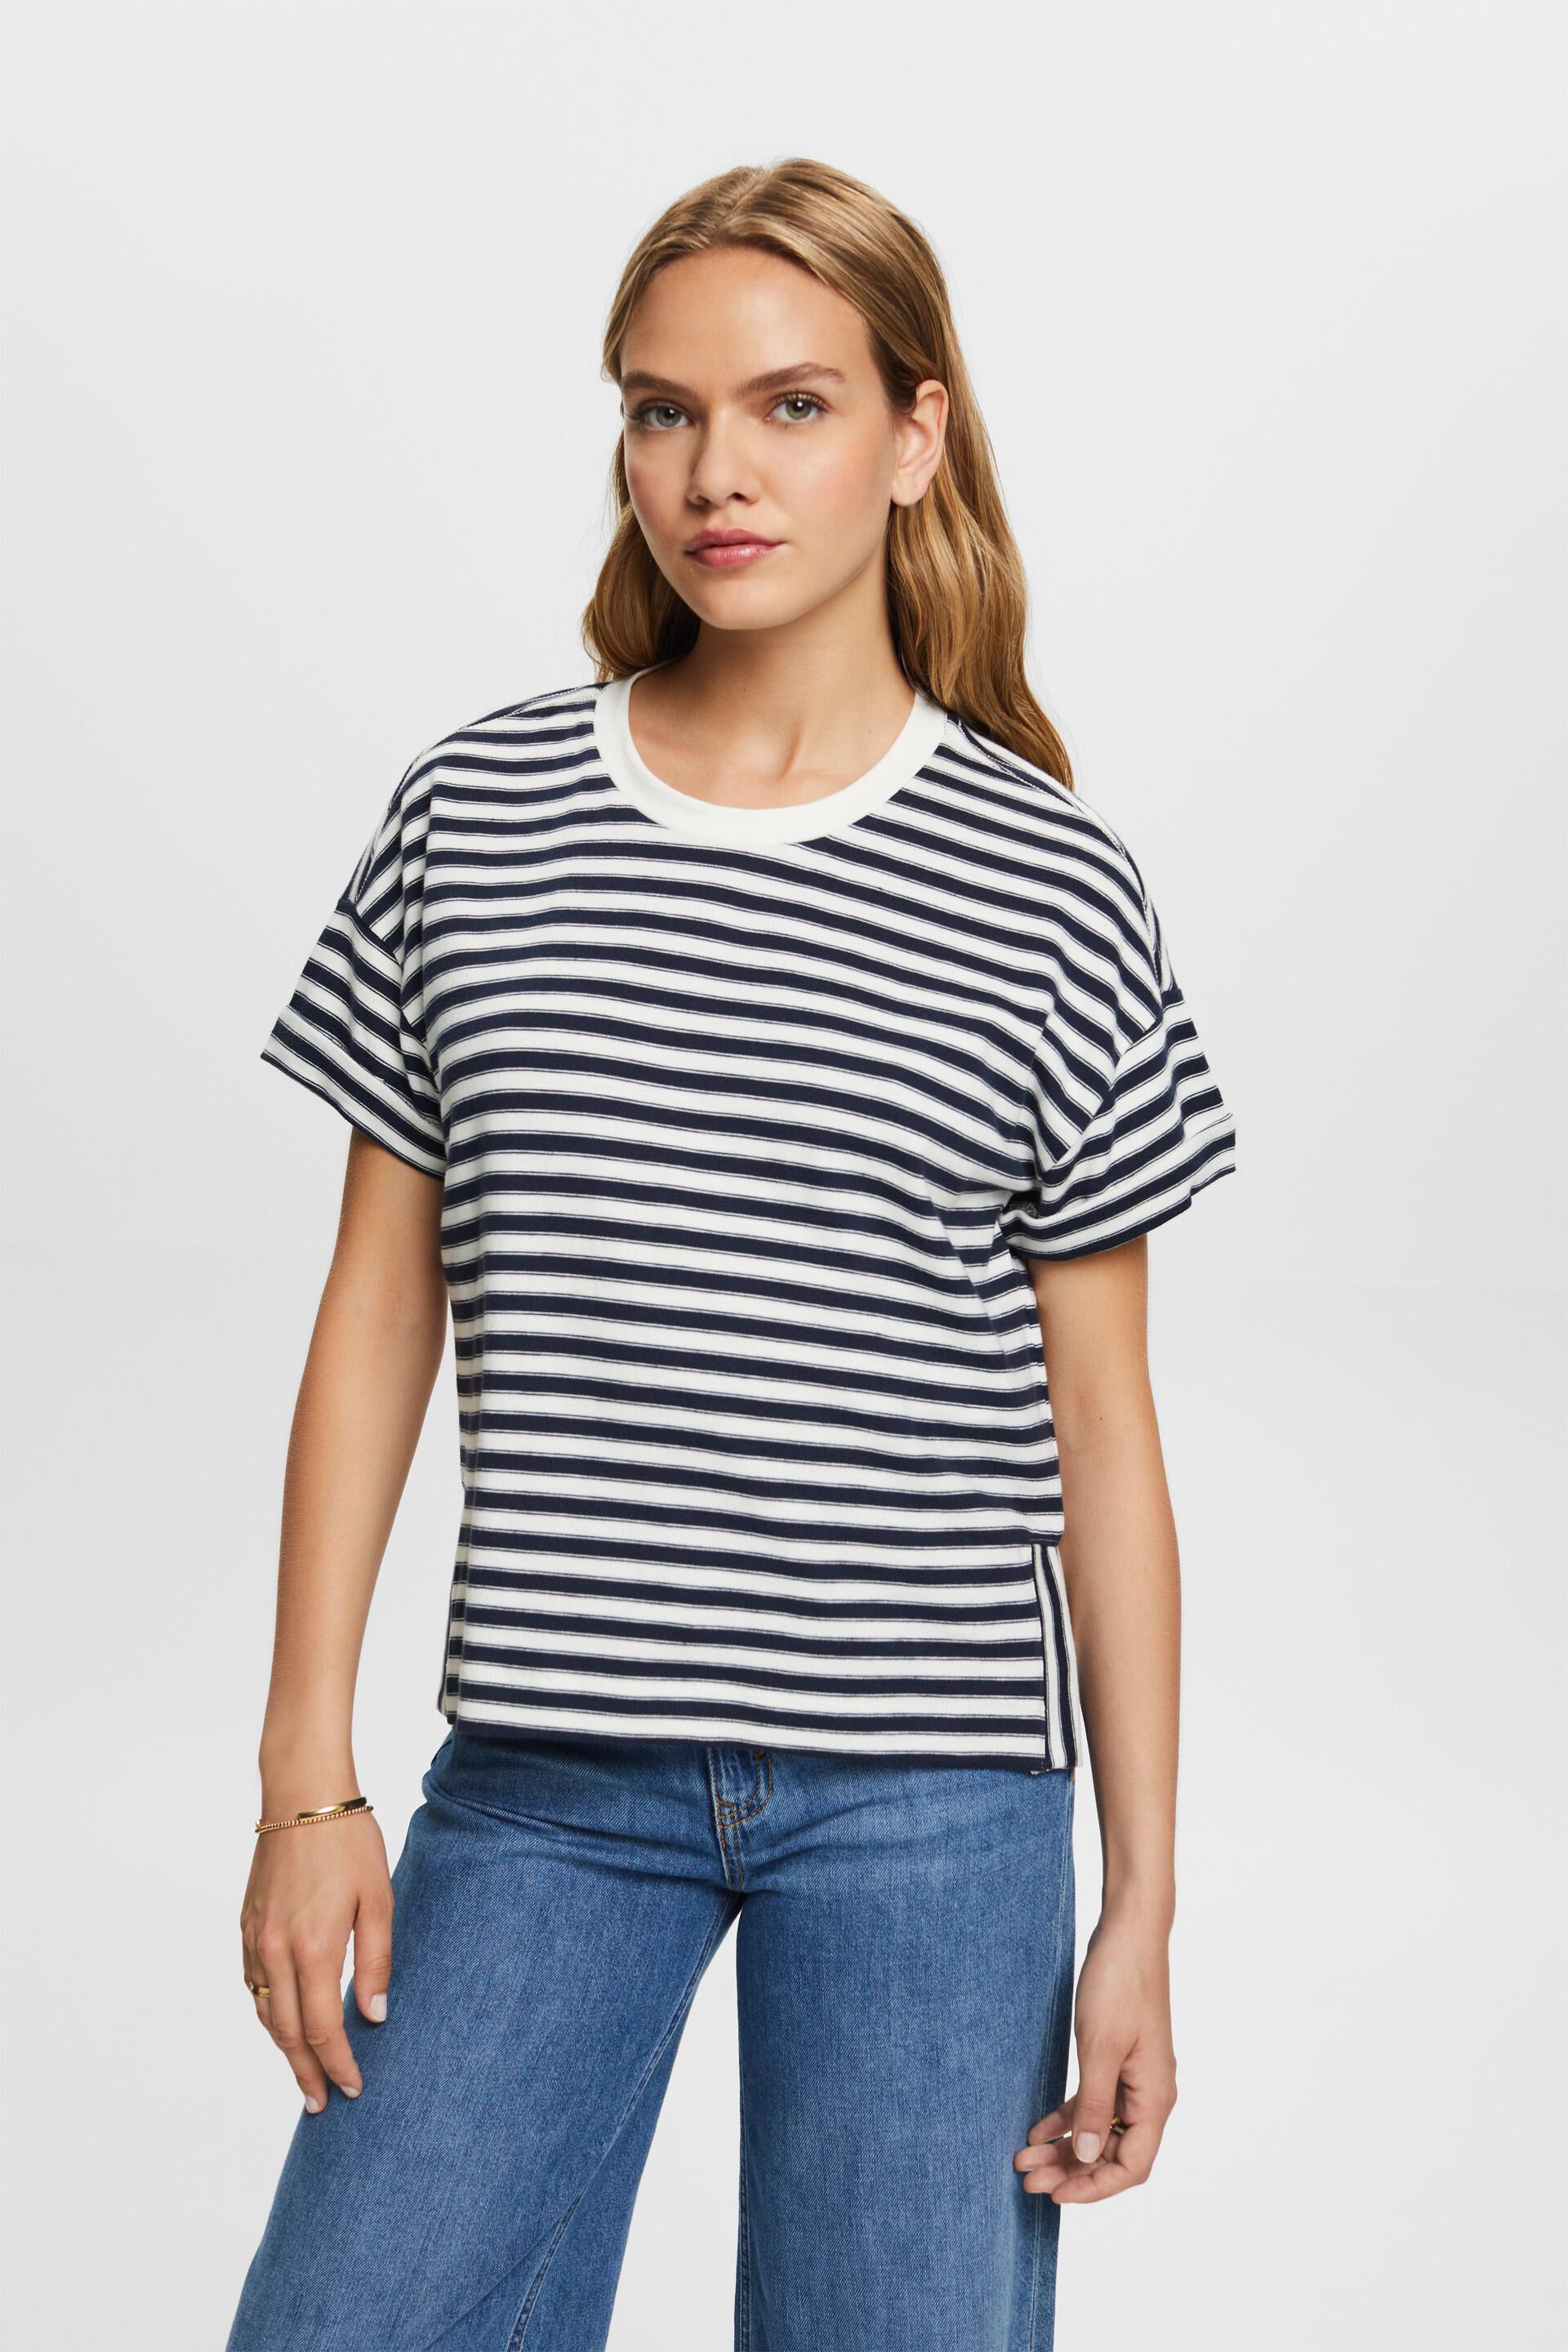 Esprit Damen Striped t-shirt, 100% cotton